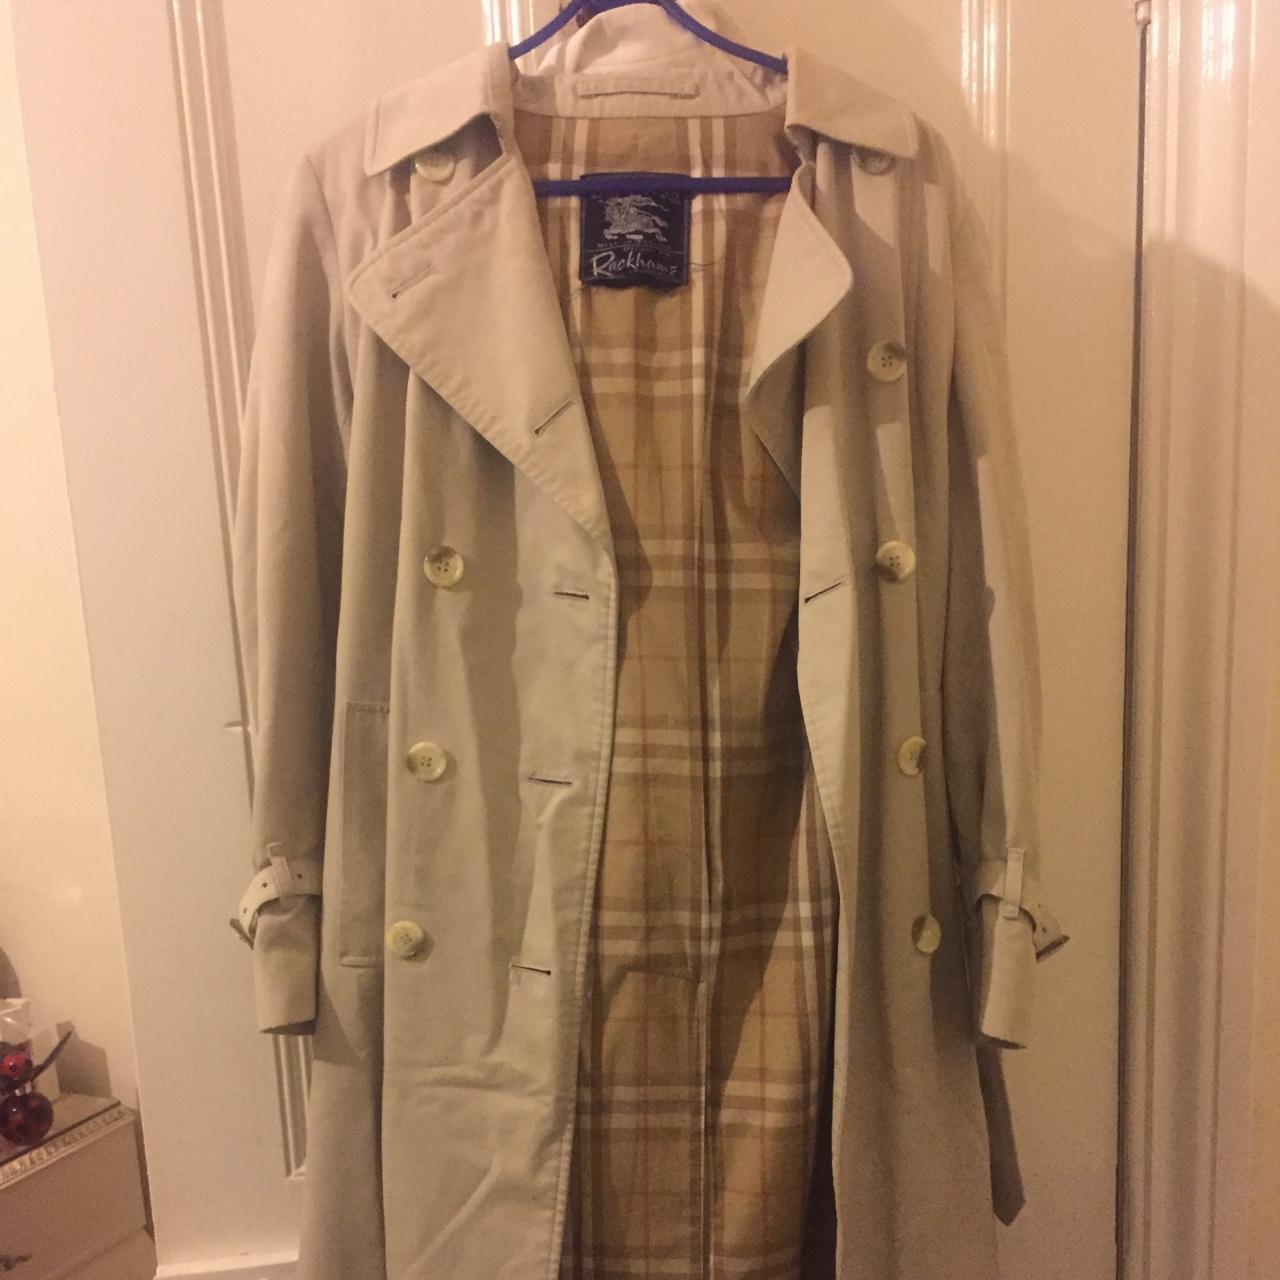 Burberry trench coat size 14-16 never worn vintage - Depop